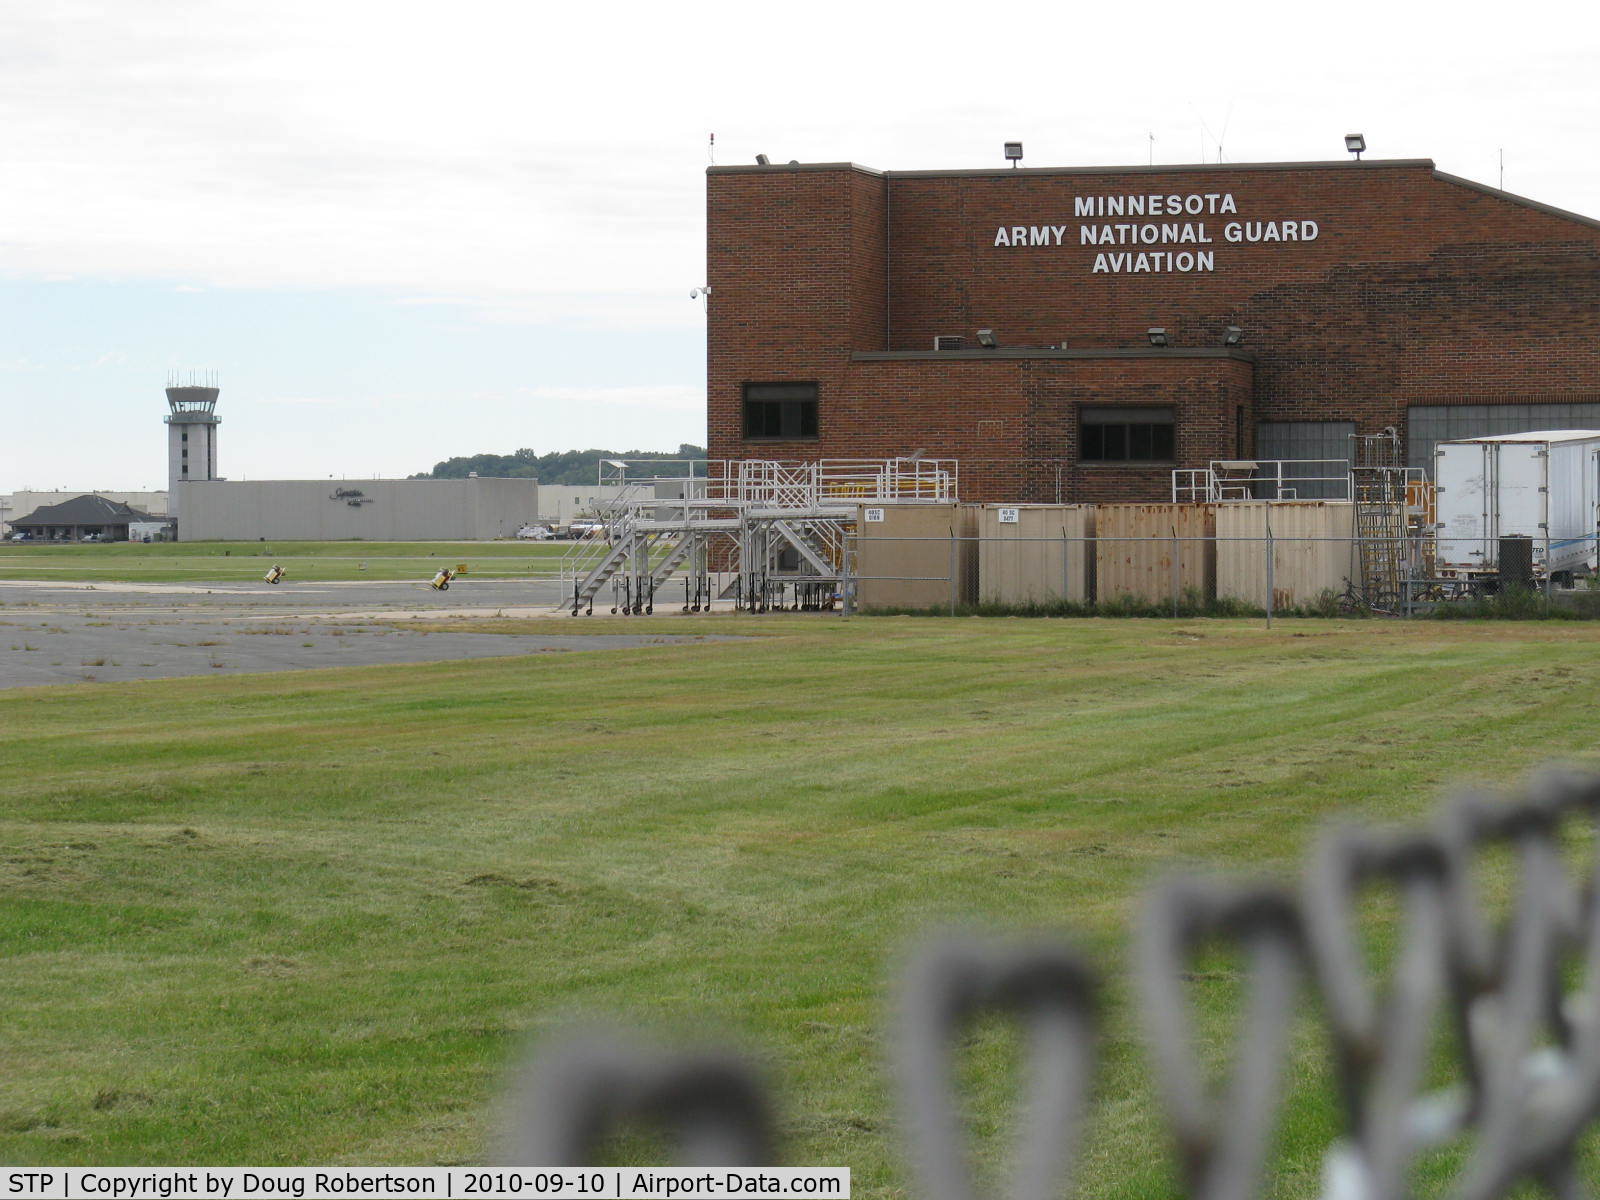 St Paul Downtown Holman Fld Airport (STP) - Minnesota Army National Guard Aviation Building 